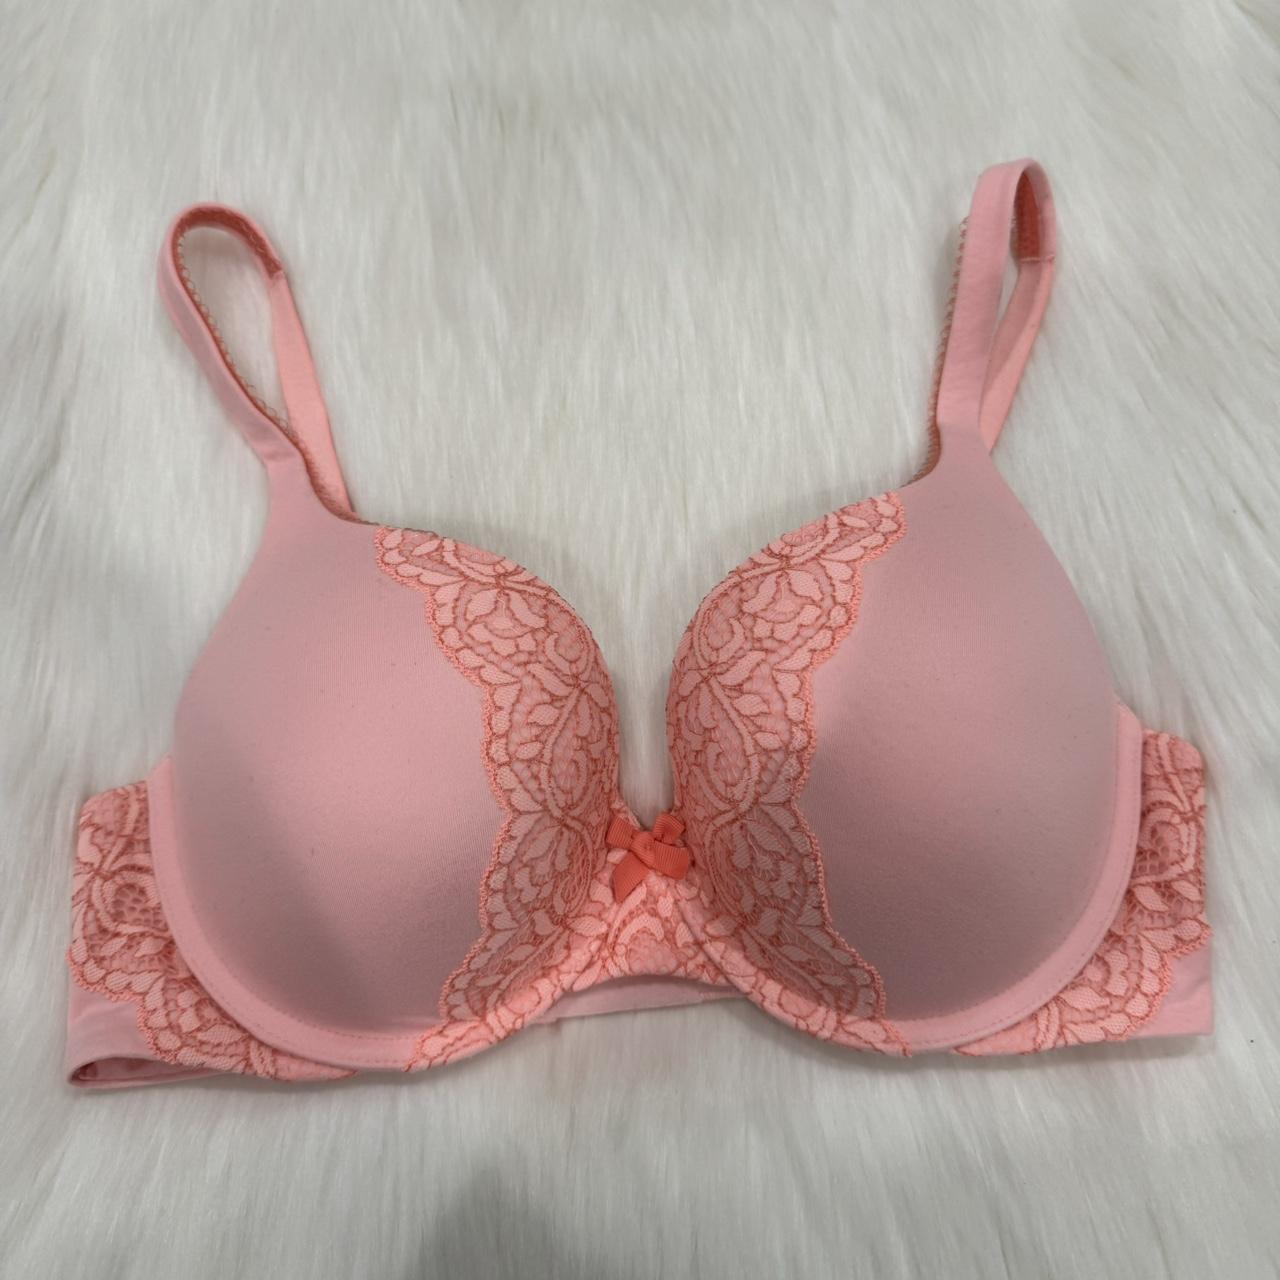 Victorias secret the perfect shape blush pink bra - Depop